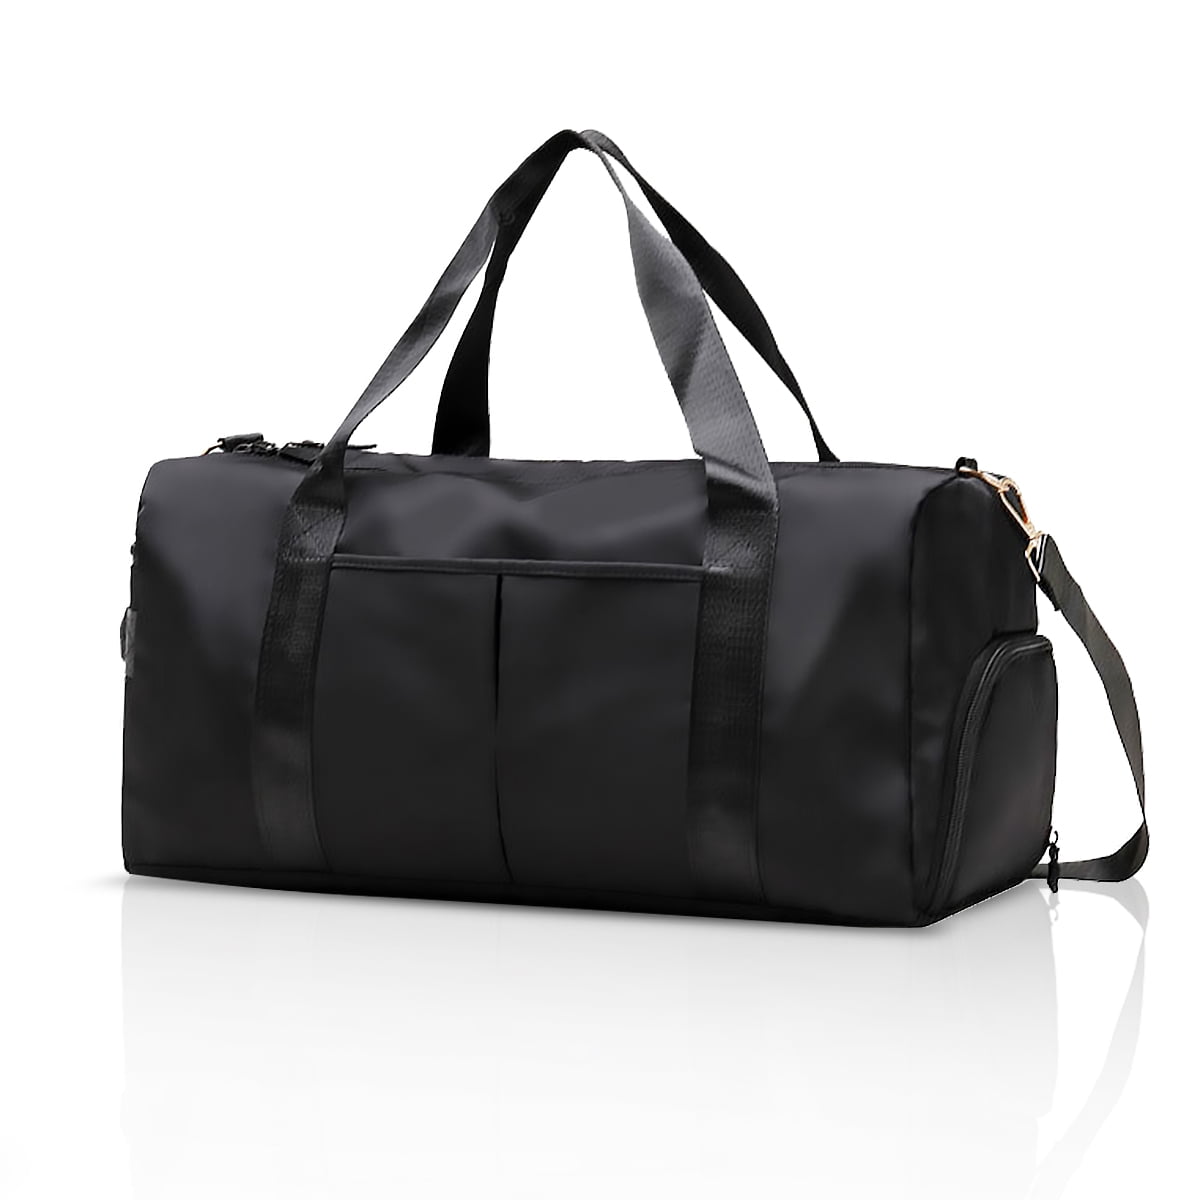 Gym bag Weekender Duffle Bag for Women & Men - Travel Sports Tote ...